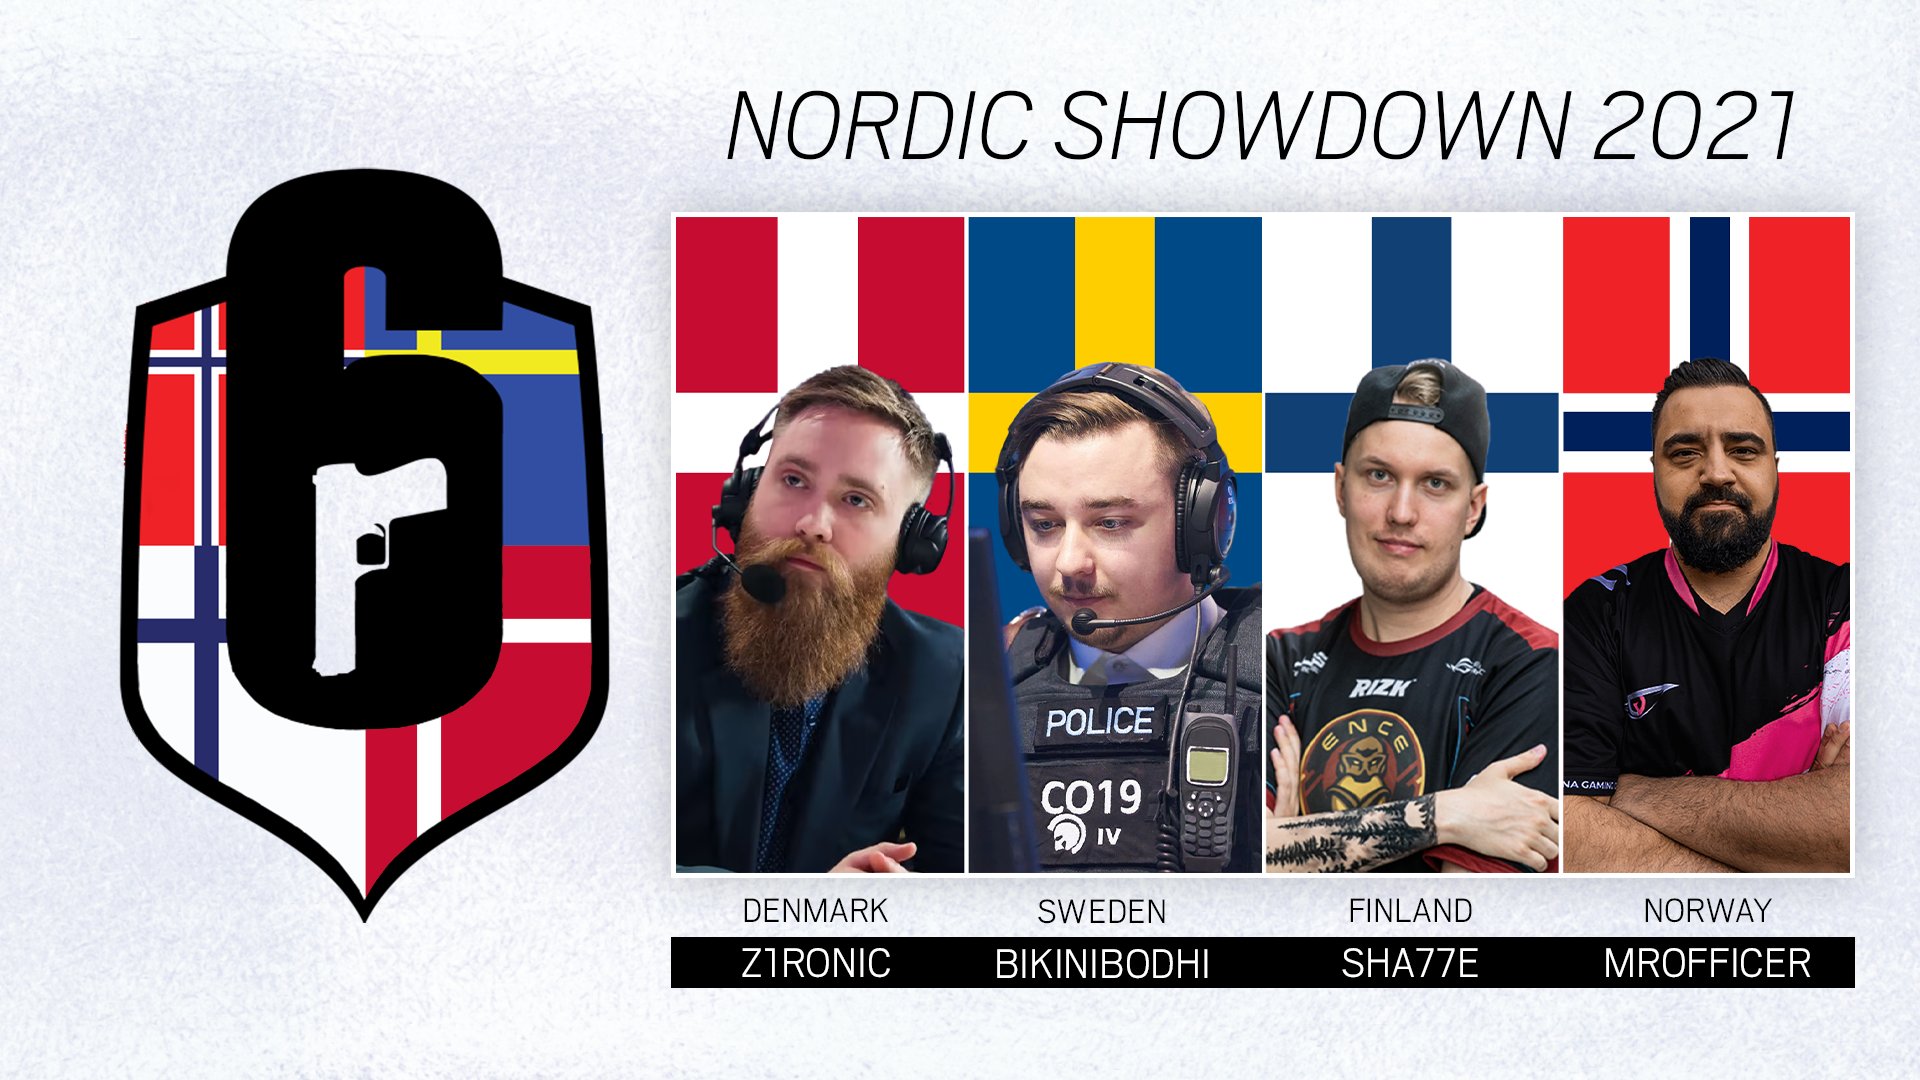 Erkkari selected for Team Finland in R6S Nordic Showdown